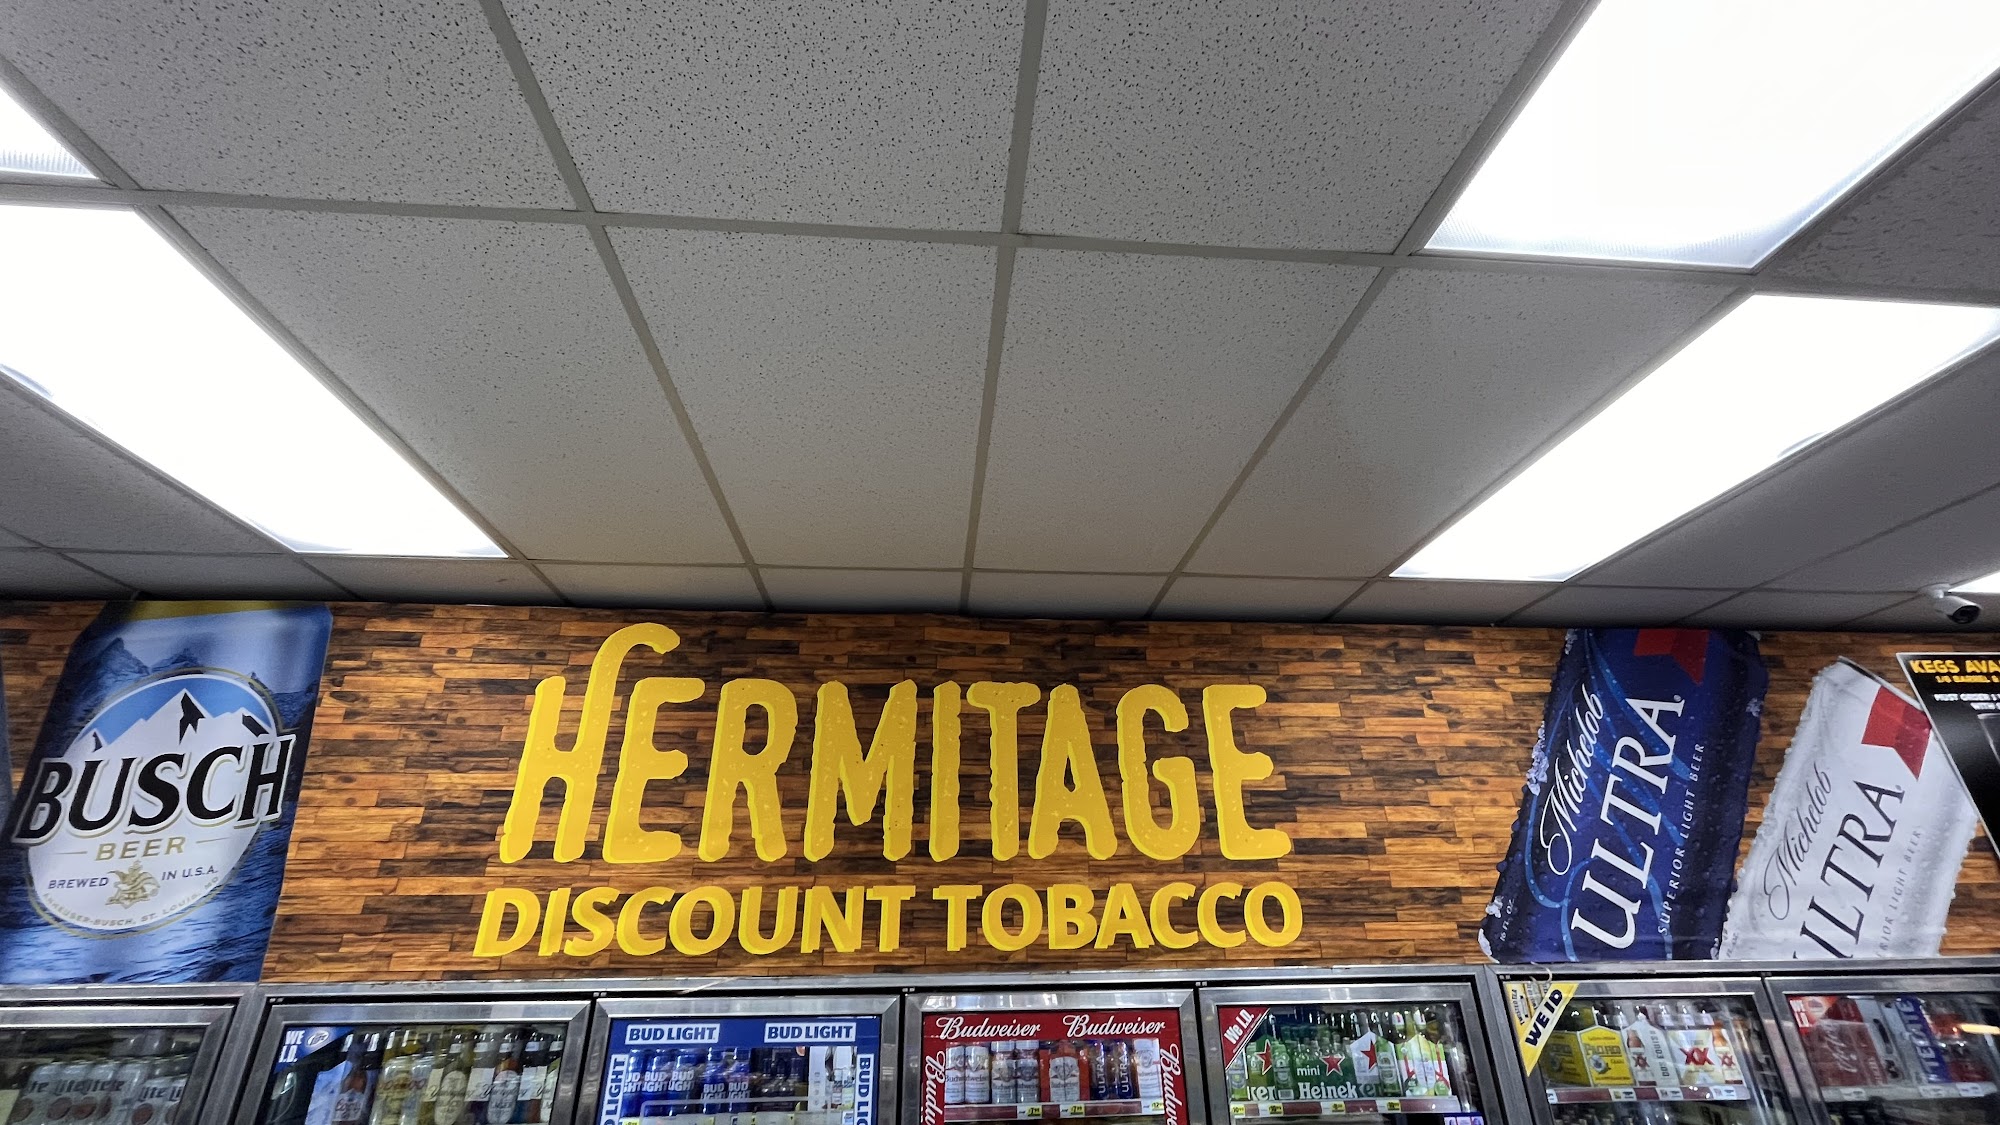 Hermitage Discount Tobacco & Beer